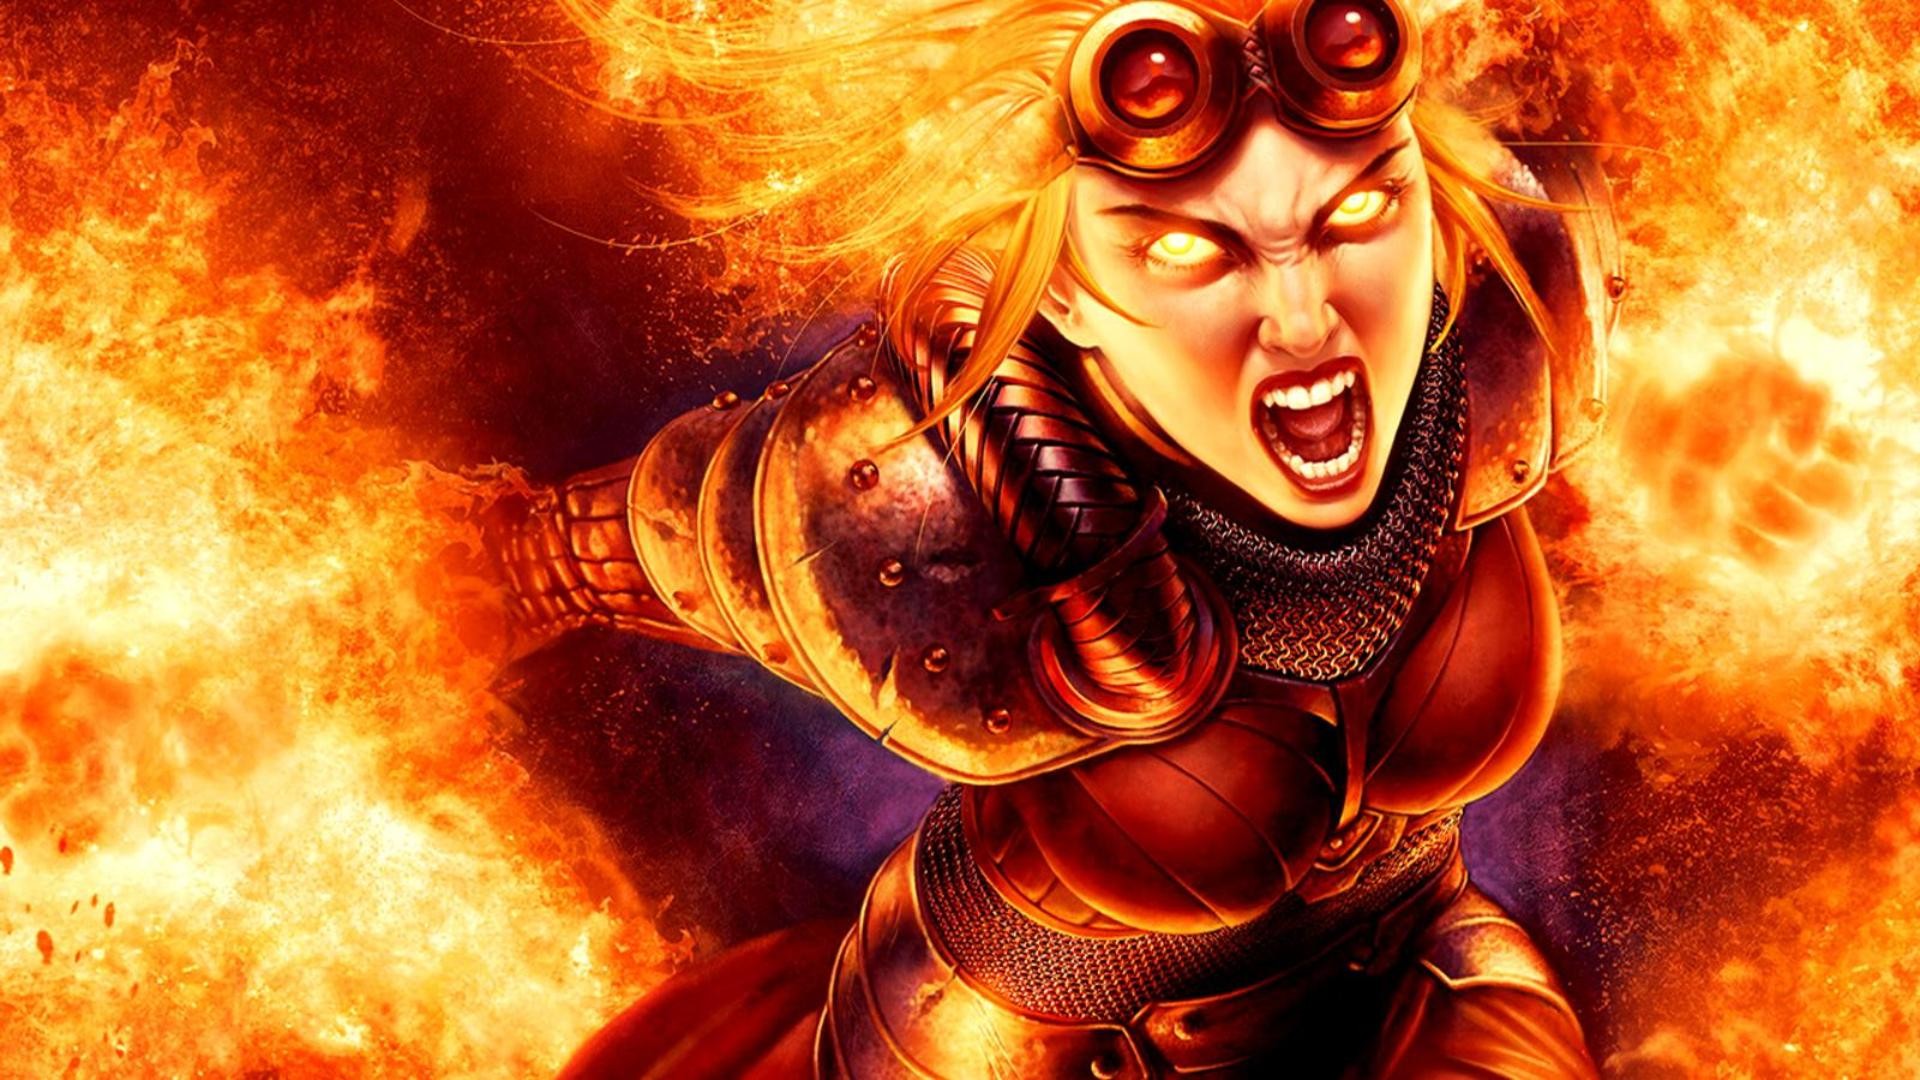 Wallpaper Fire Magic The Gathering Warriors Chandra